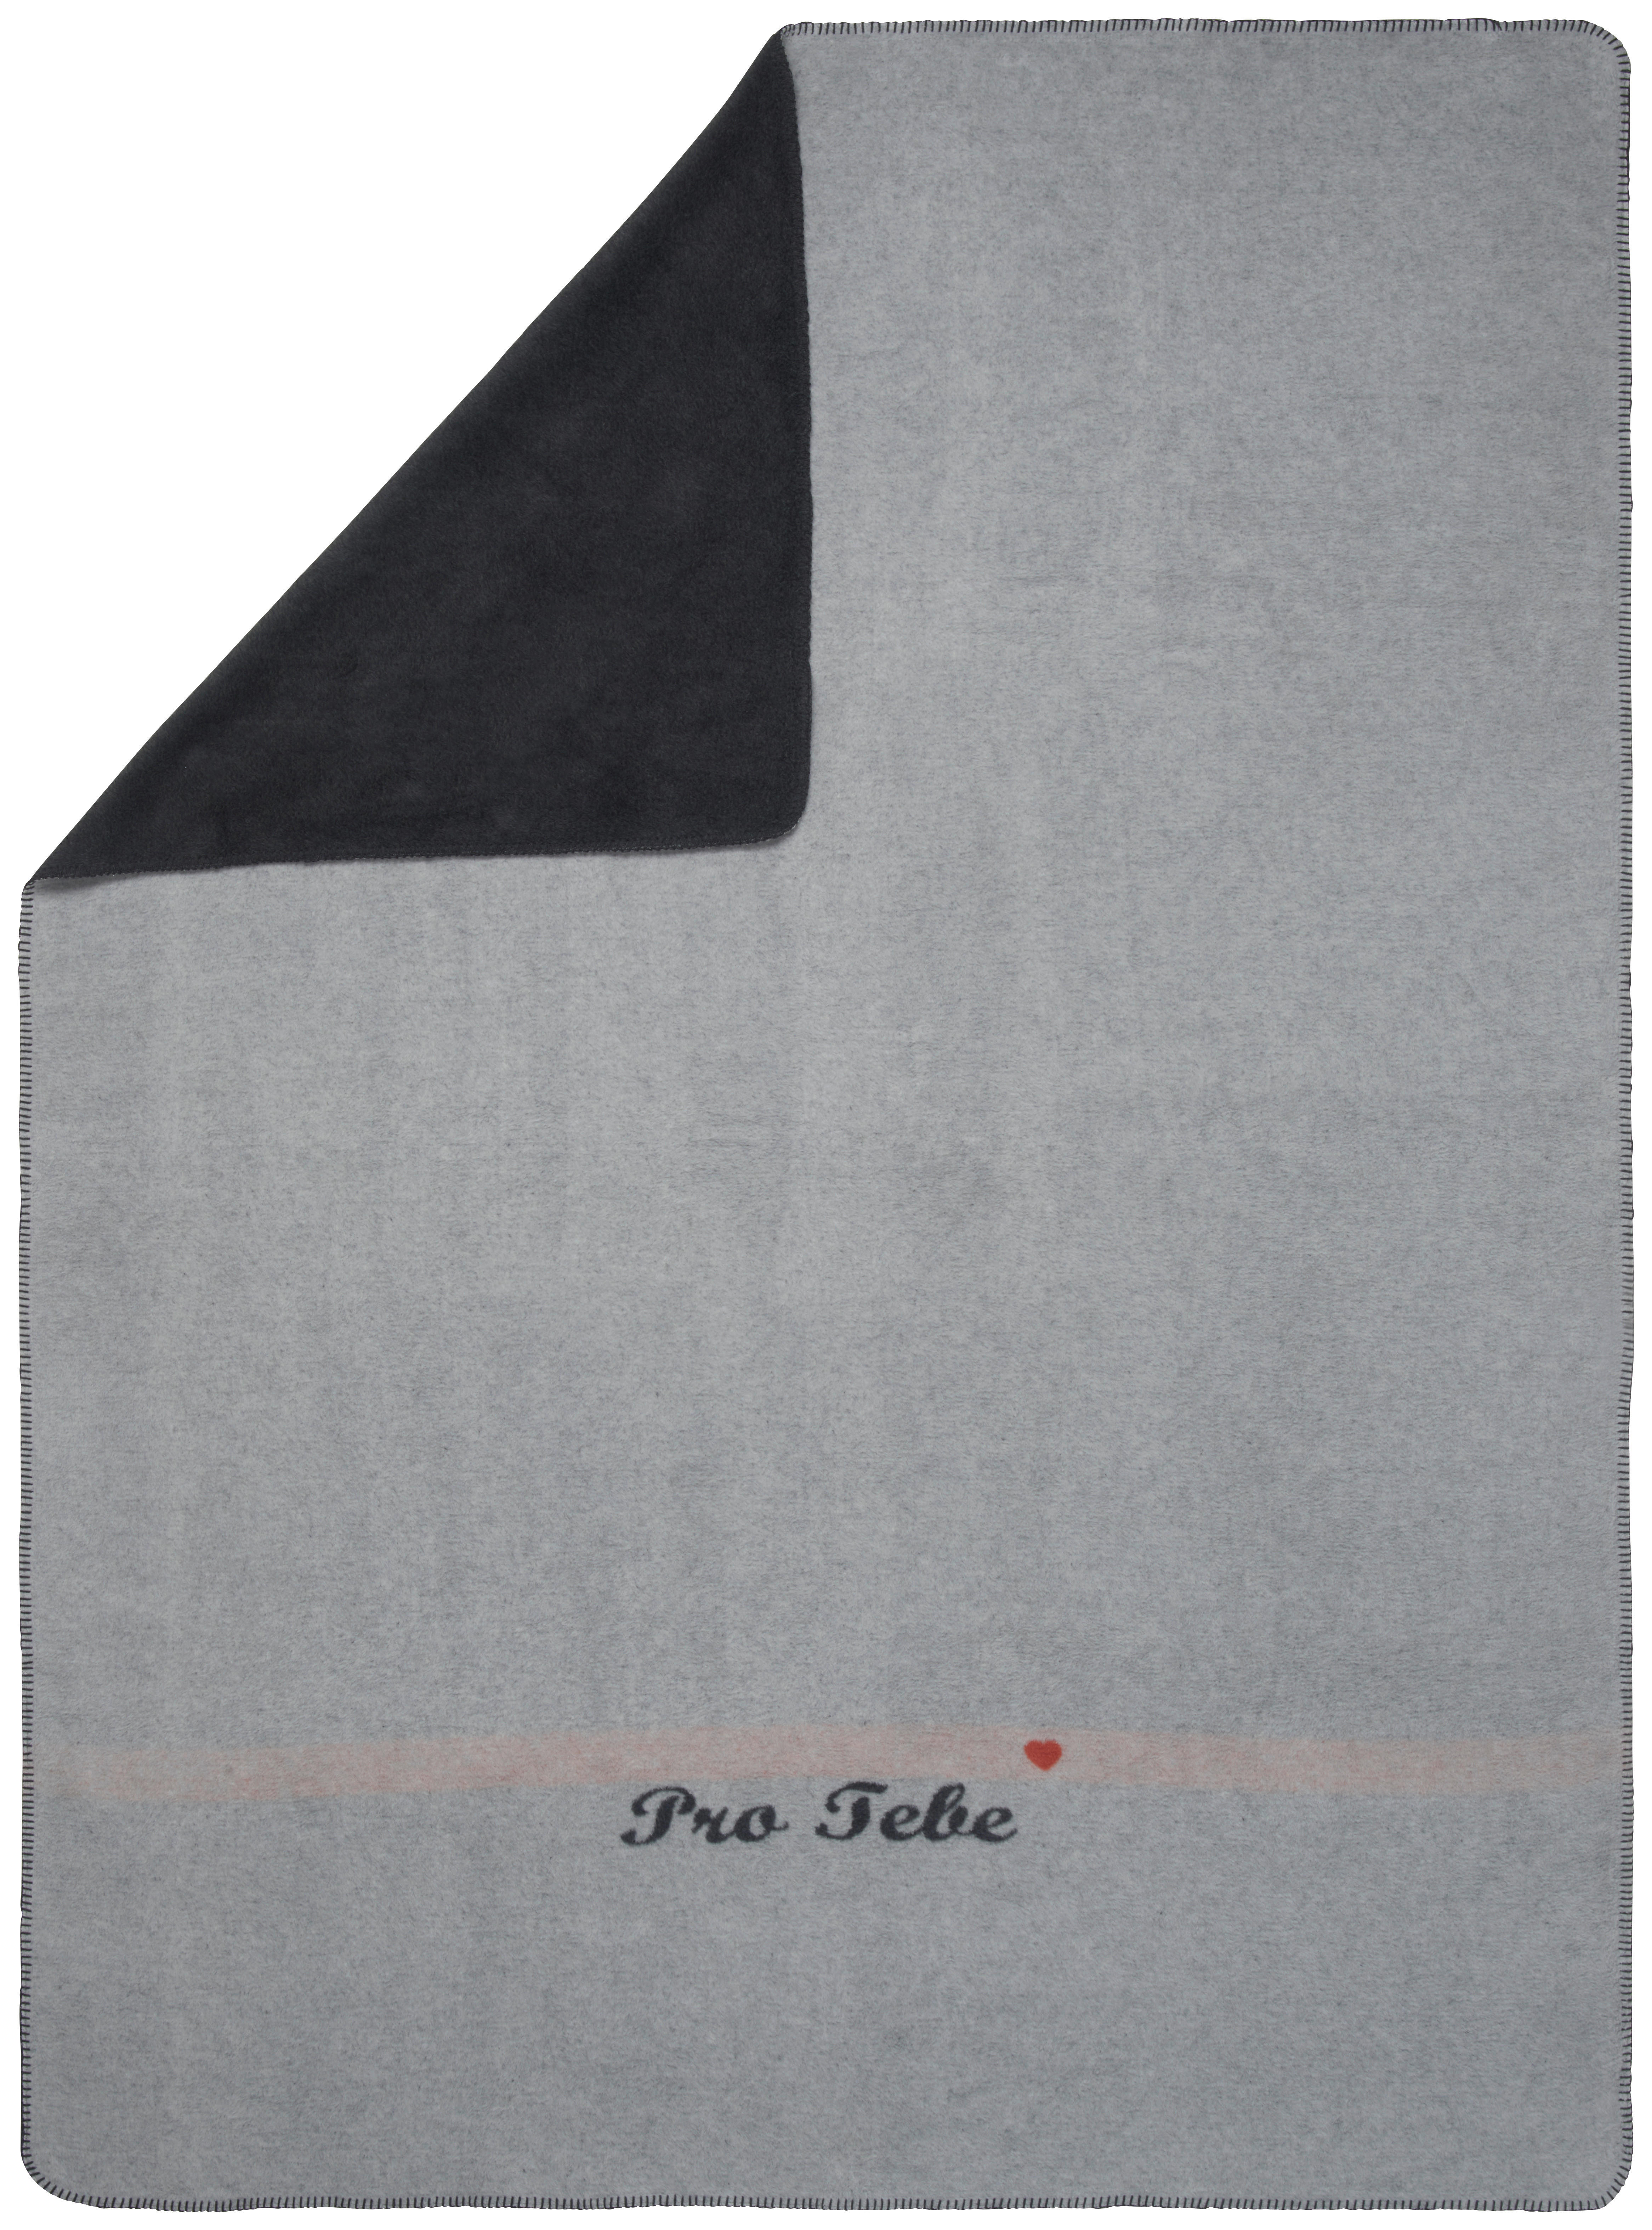 Levně David Fussenegger MĚKKÁ DEKA, bavlna, 150/200 cm